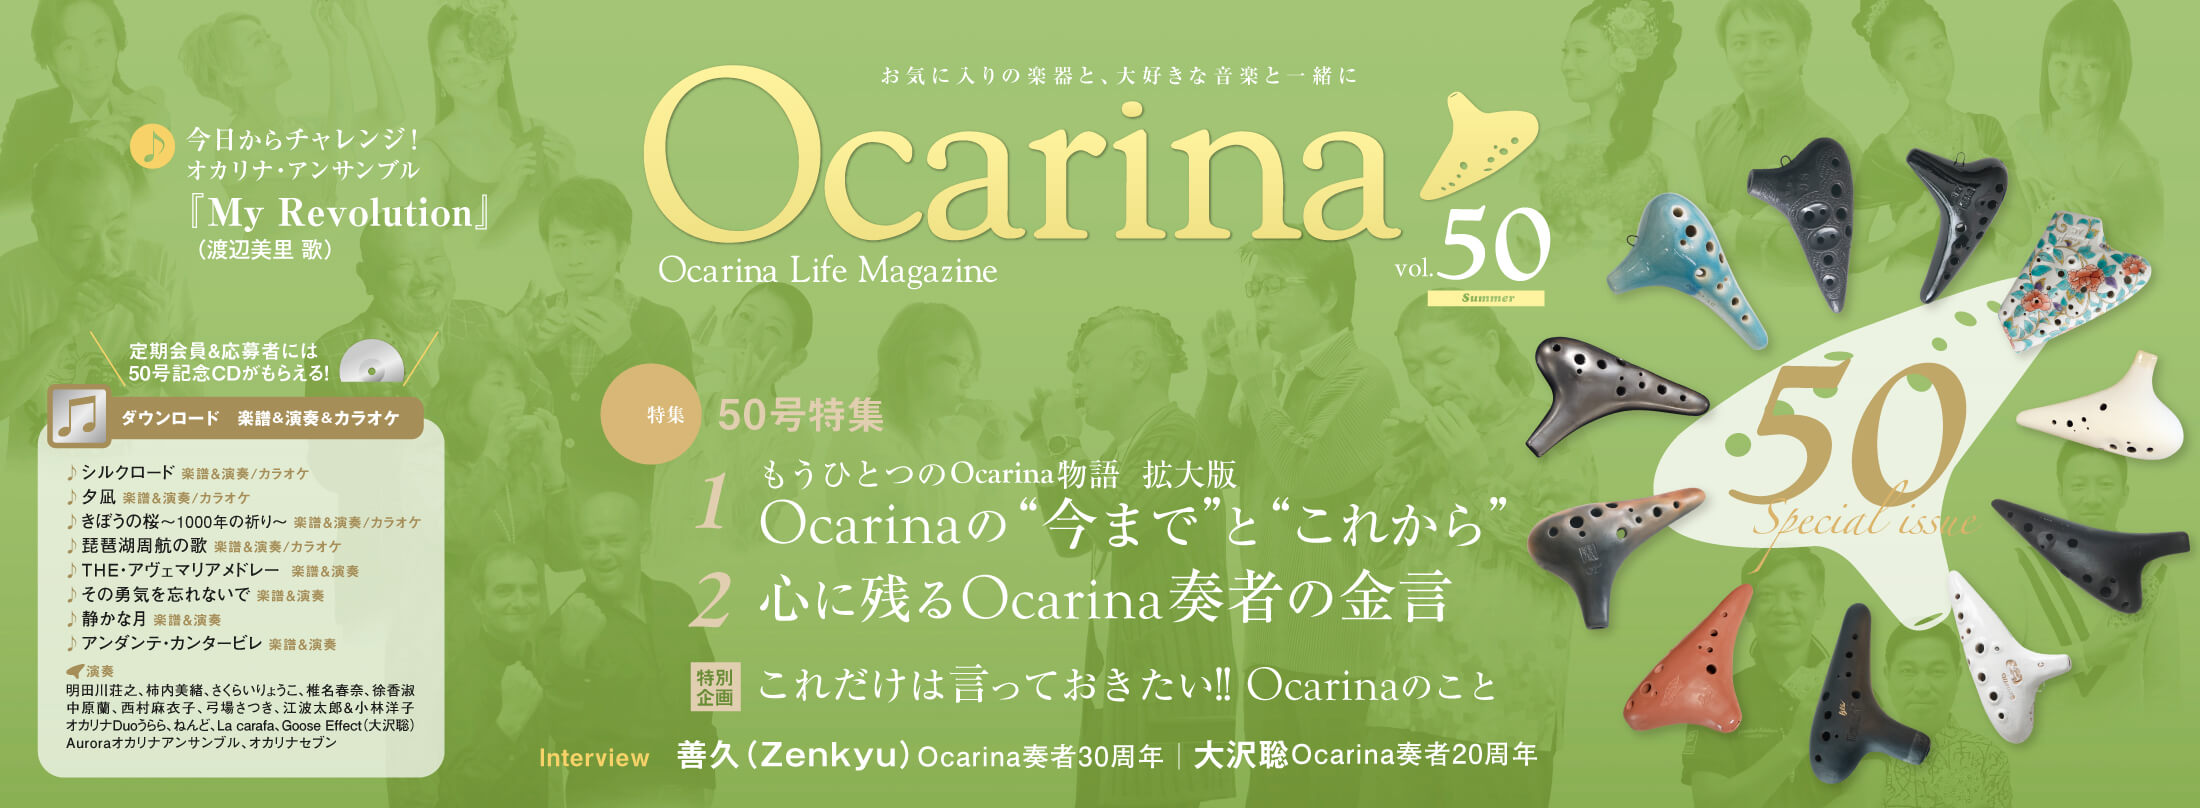 Ocarina 50号